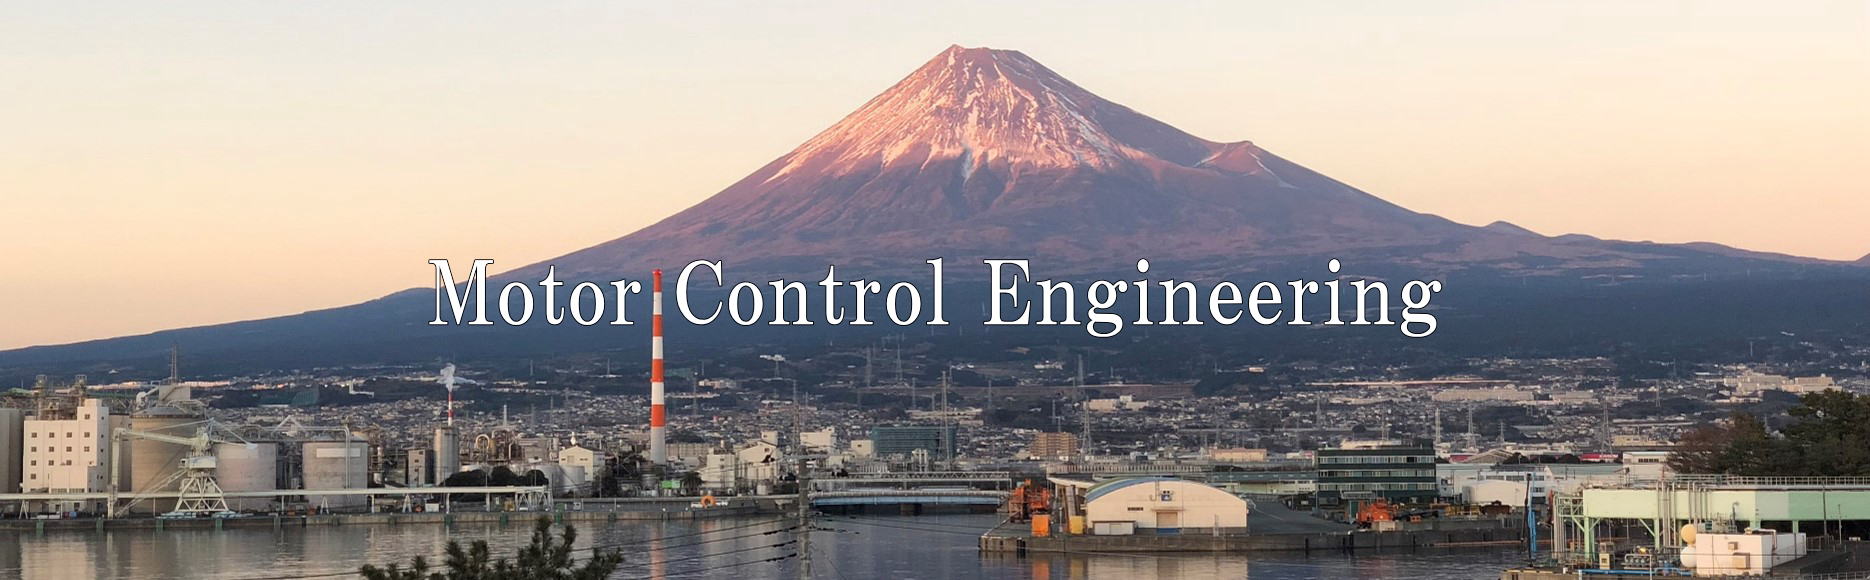 Motor Control Engineering